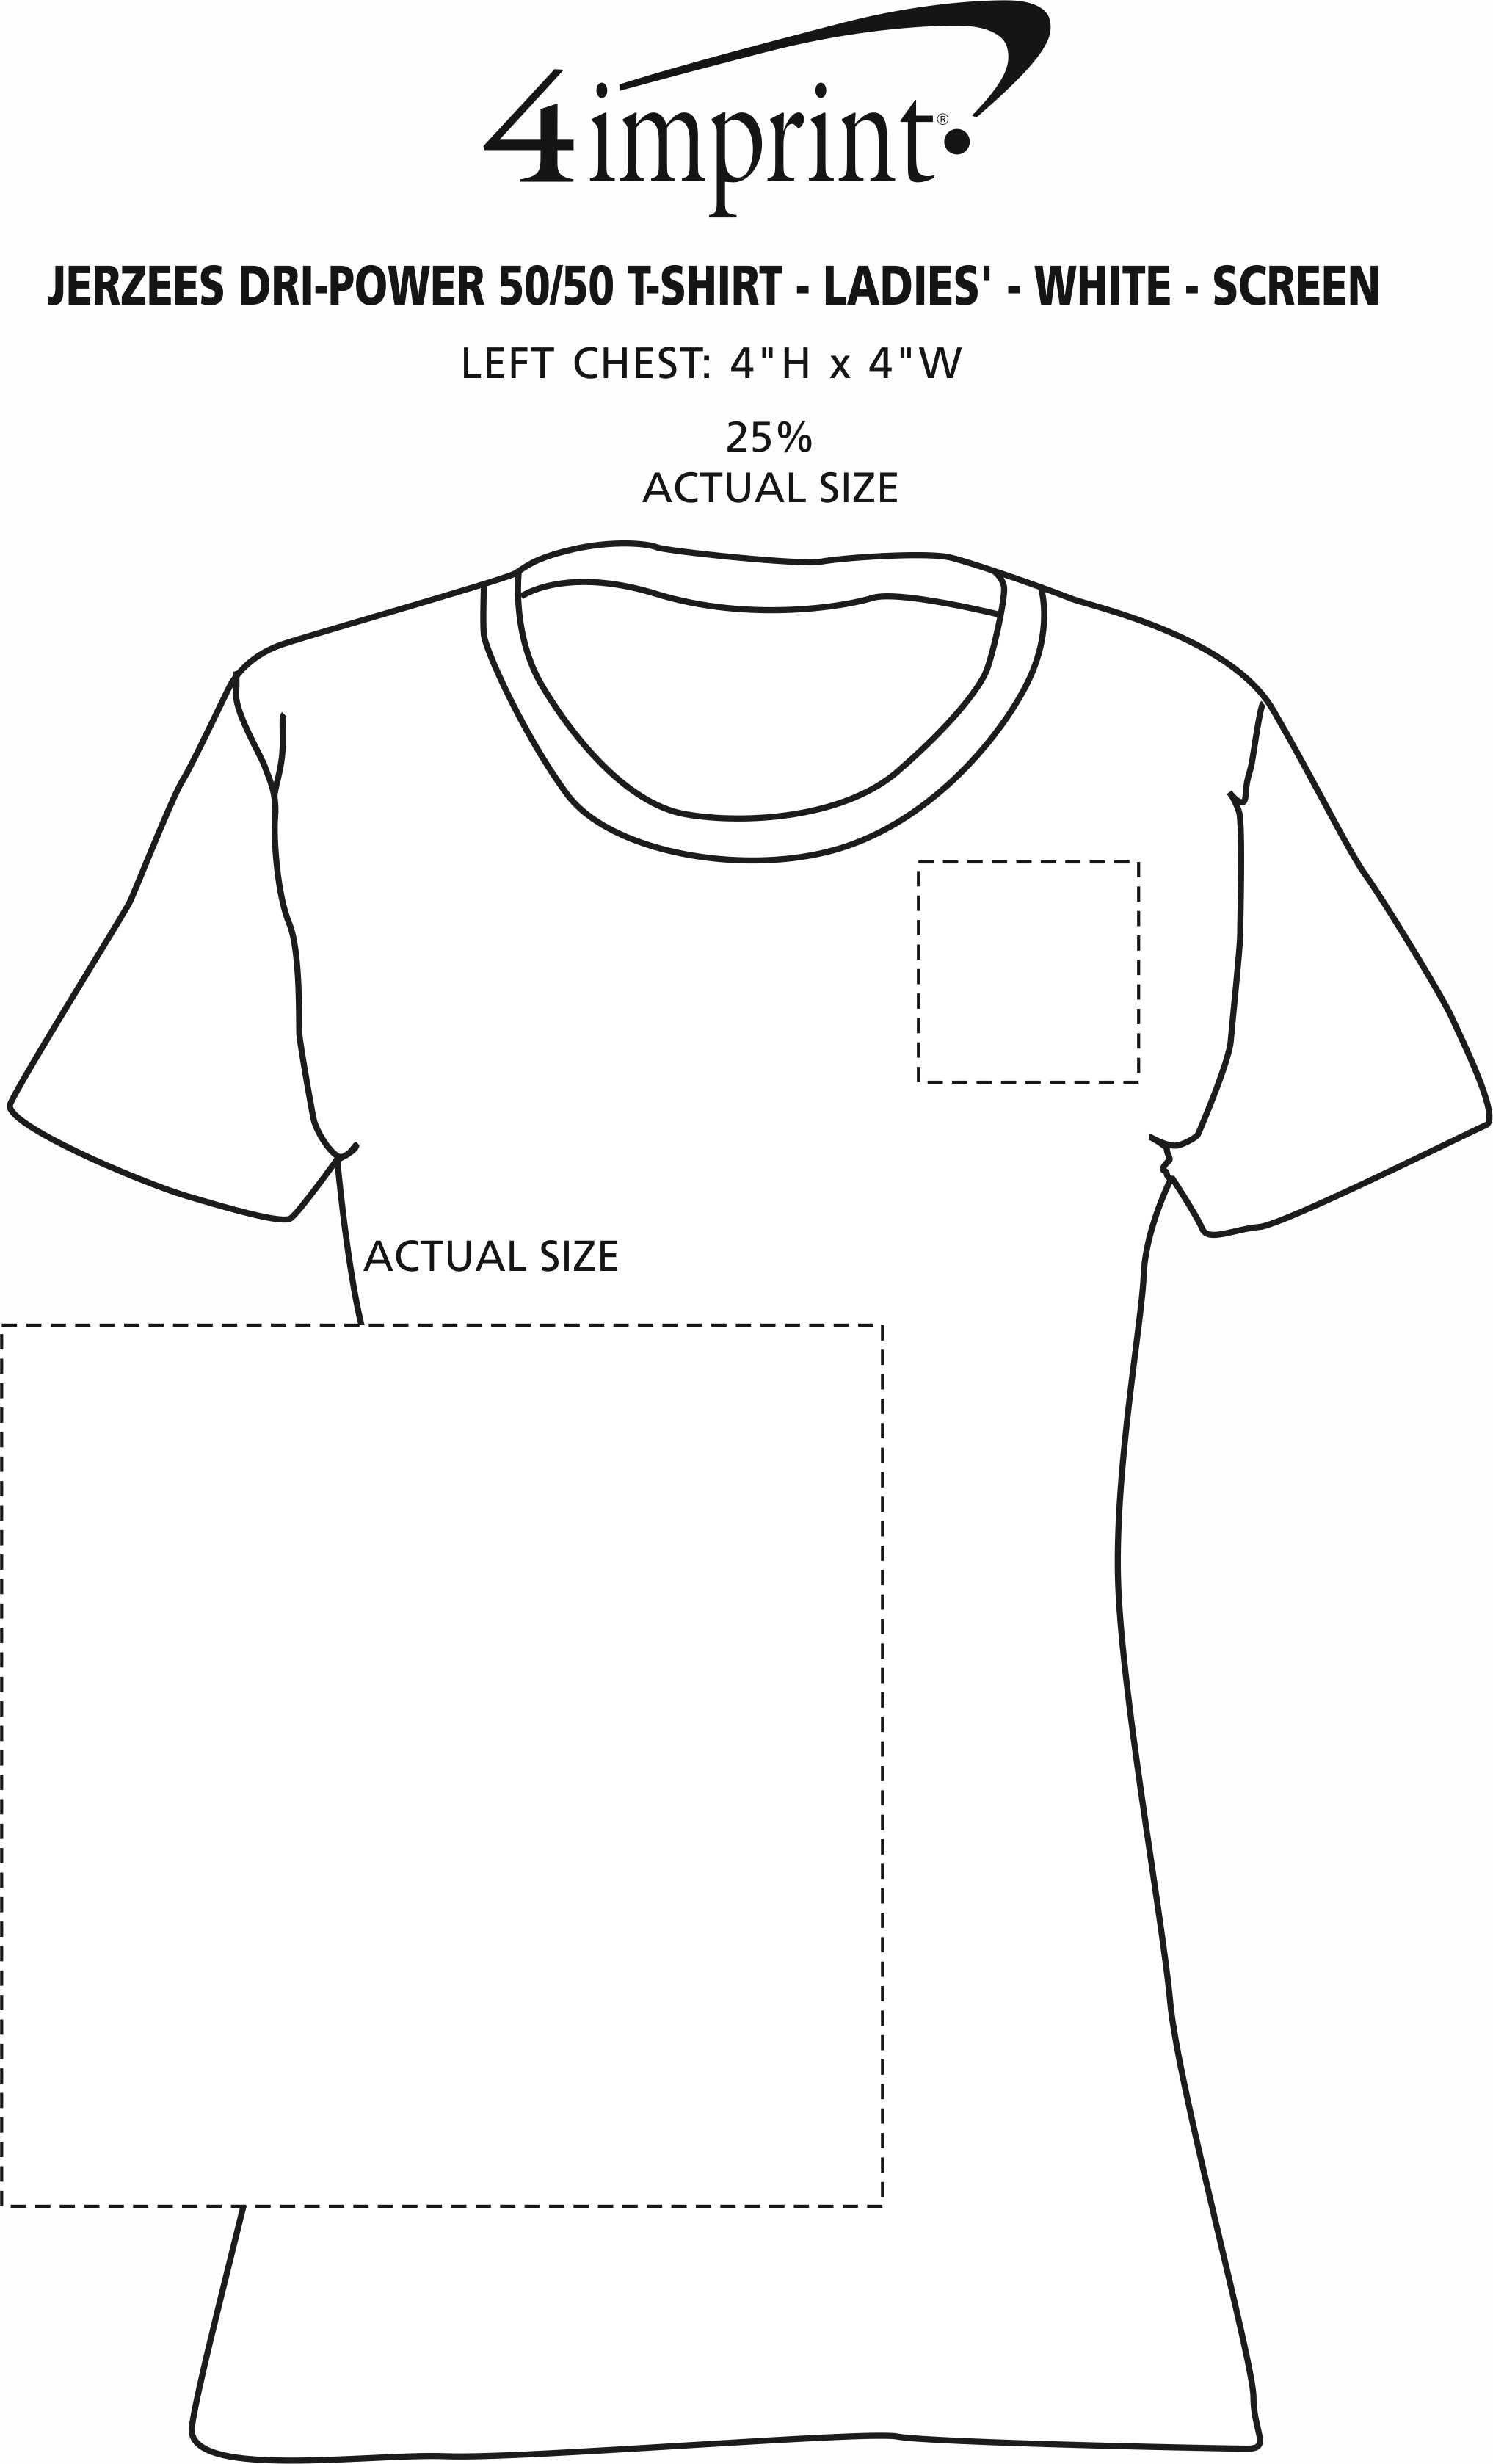 Imprint Area of Jerzees Dri-Power 50/50 T-Shirt - Ladies' - White - Screen